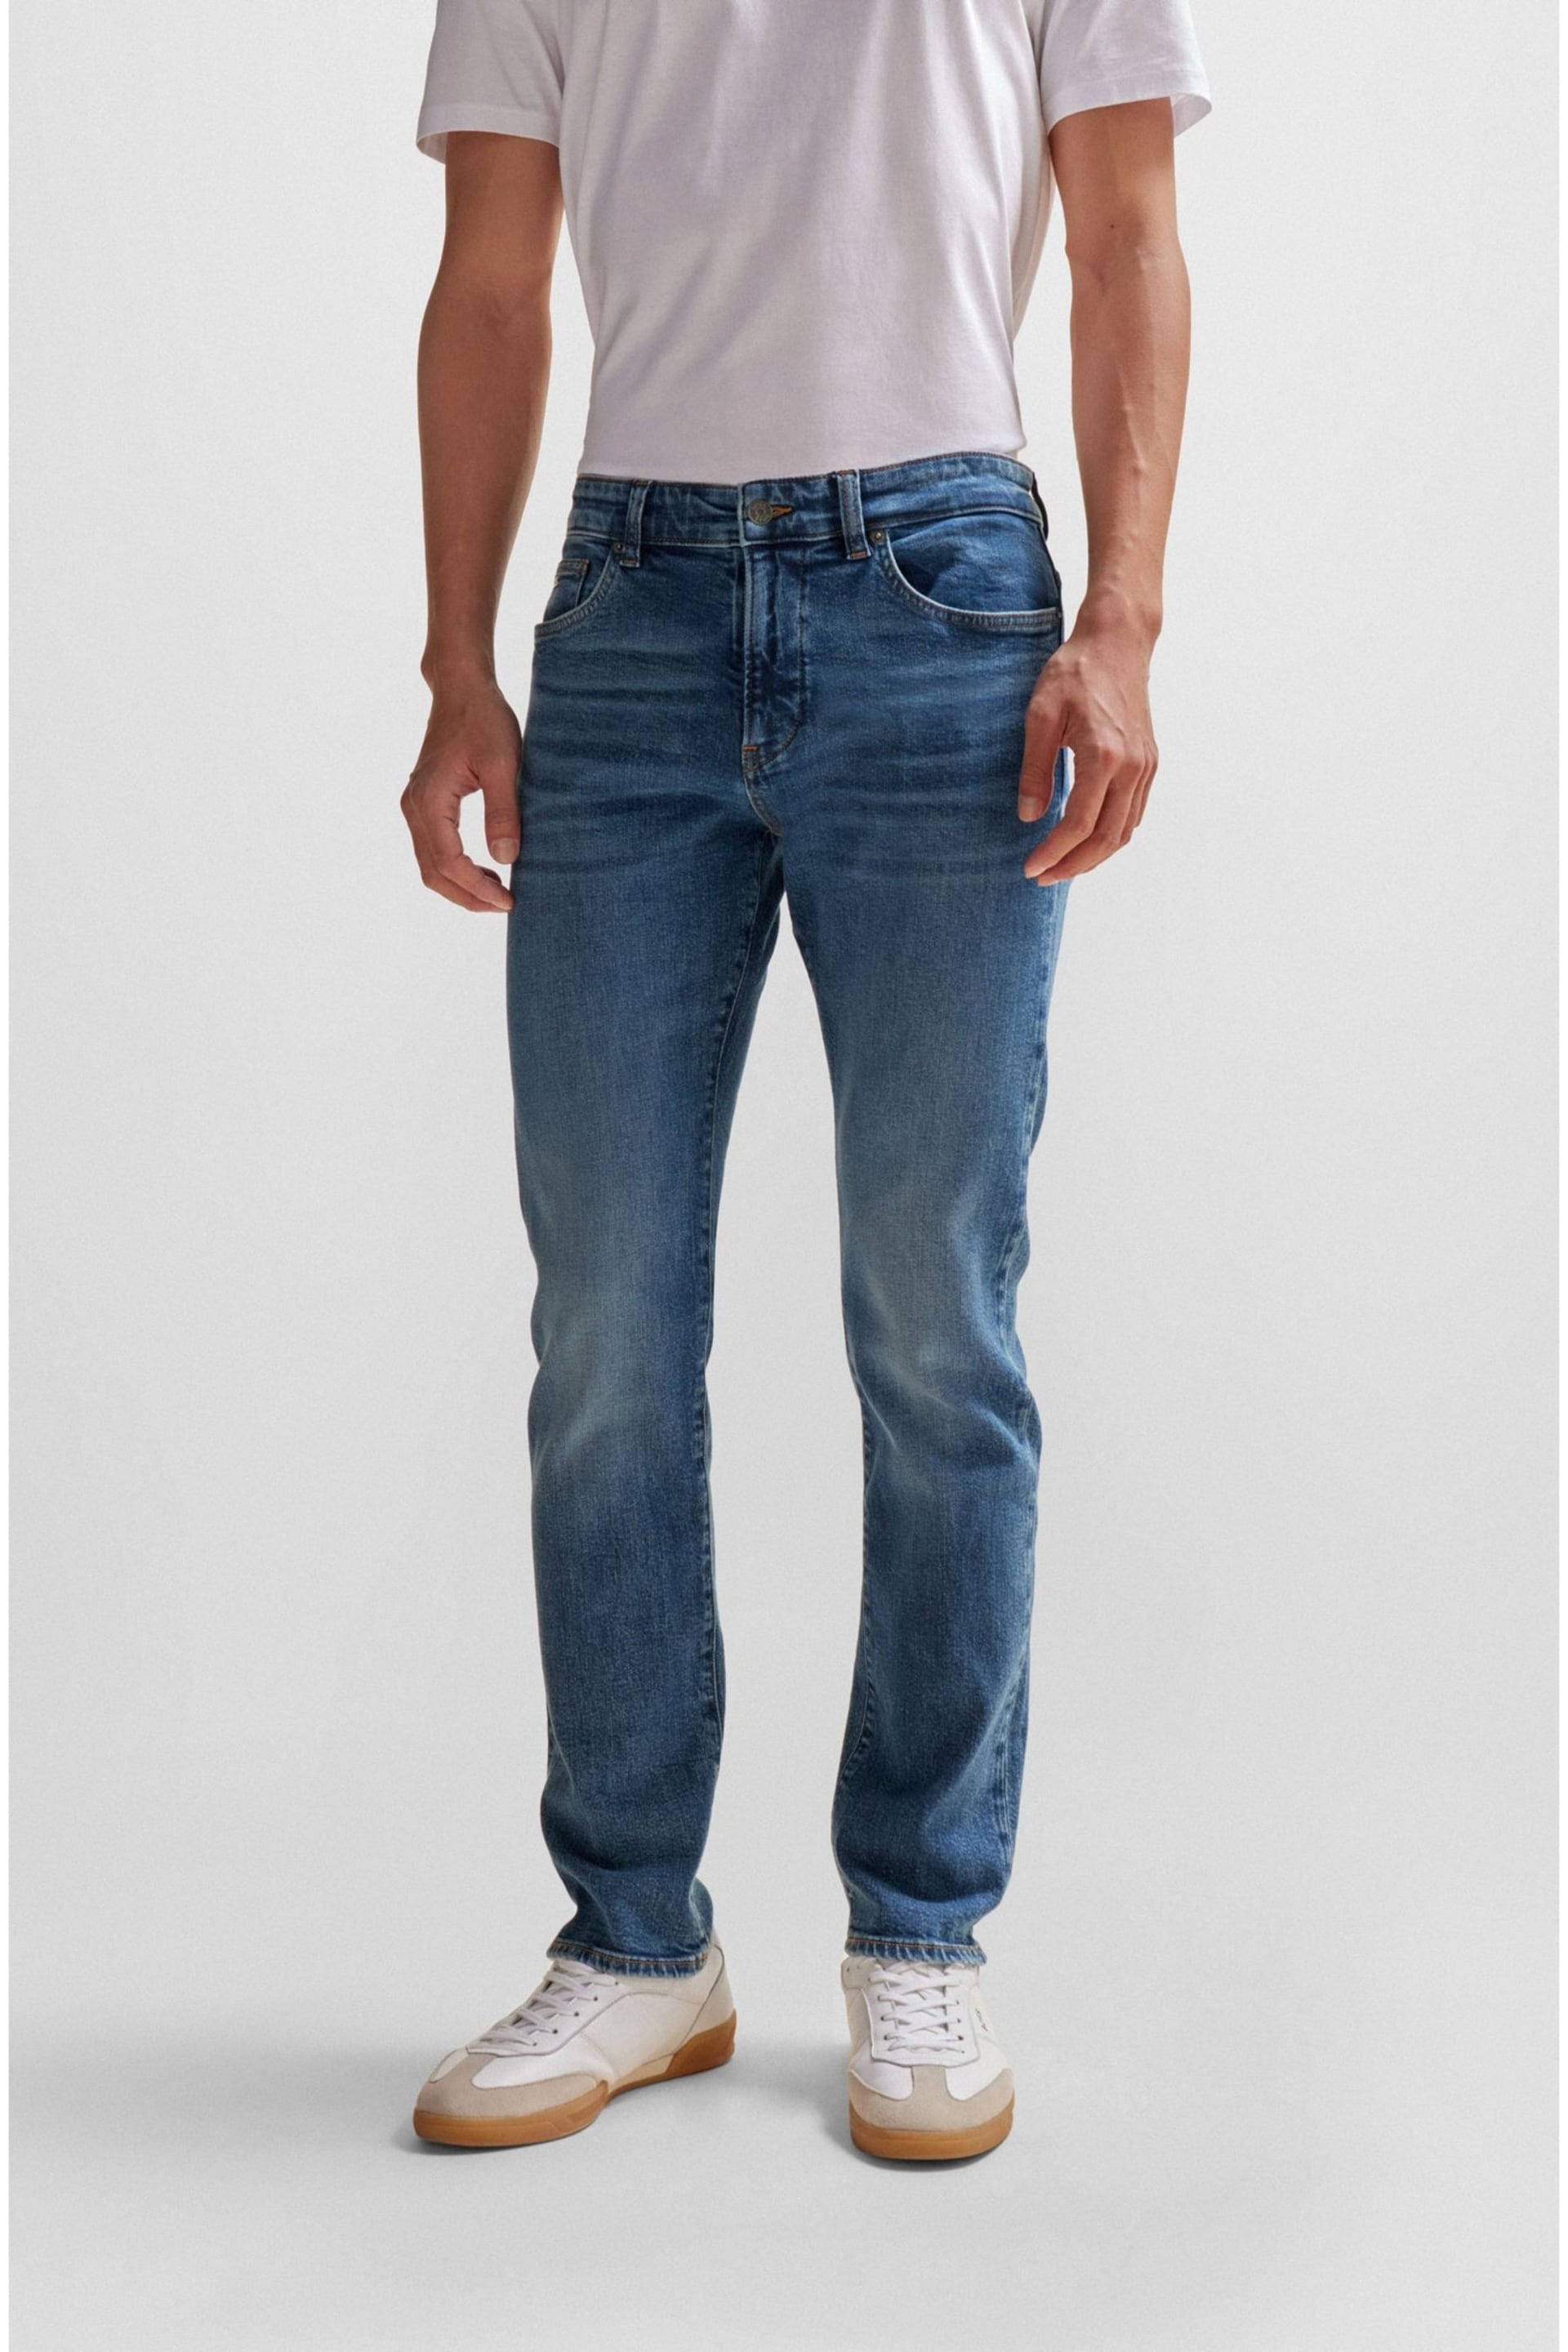 BOSS Blue Denim Delaware Slim Fit Stretch Jeans - Image 1 of 5